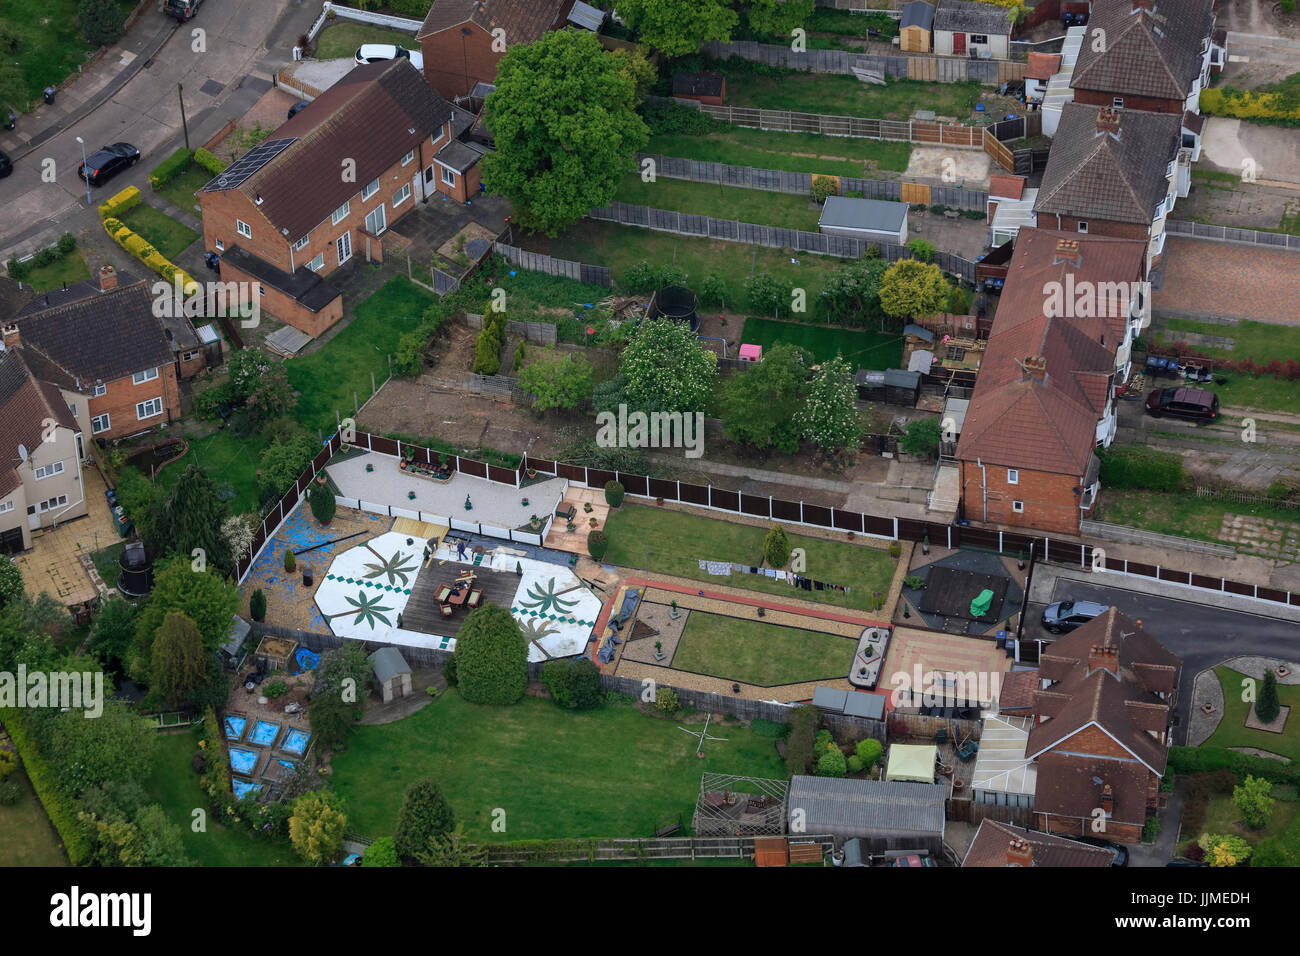 Vista aérea de una zona suburbana típica jardines traseros Foto de stock